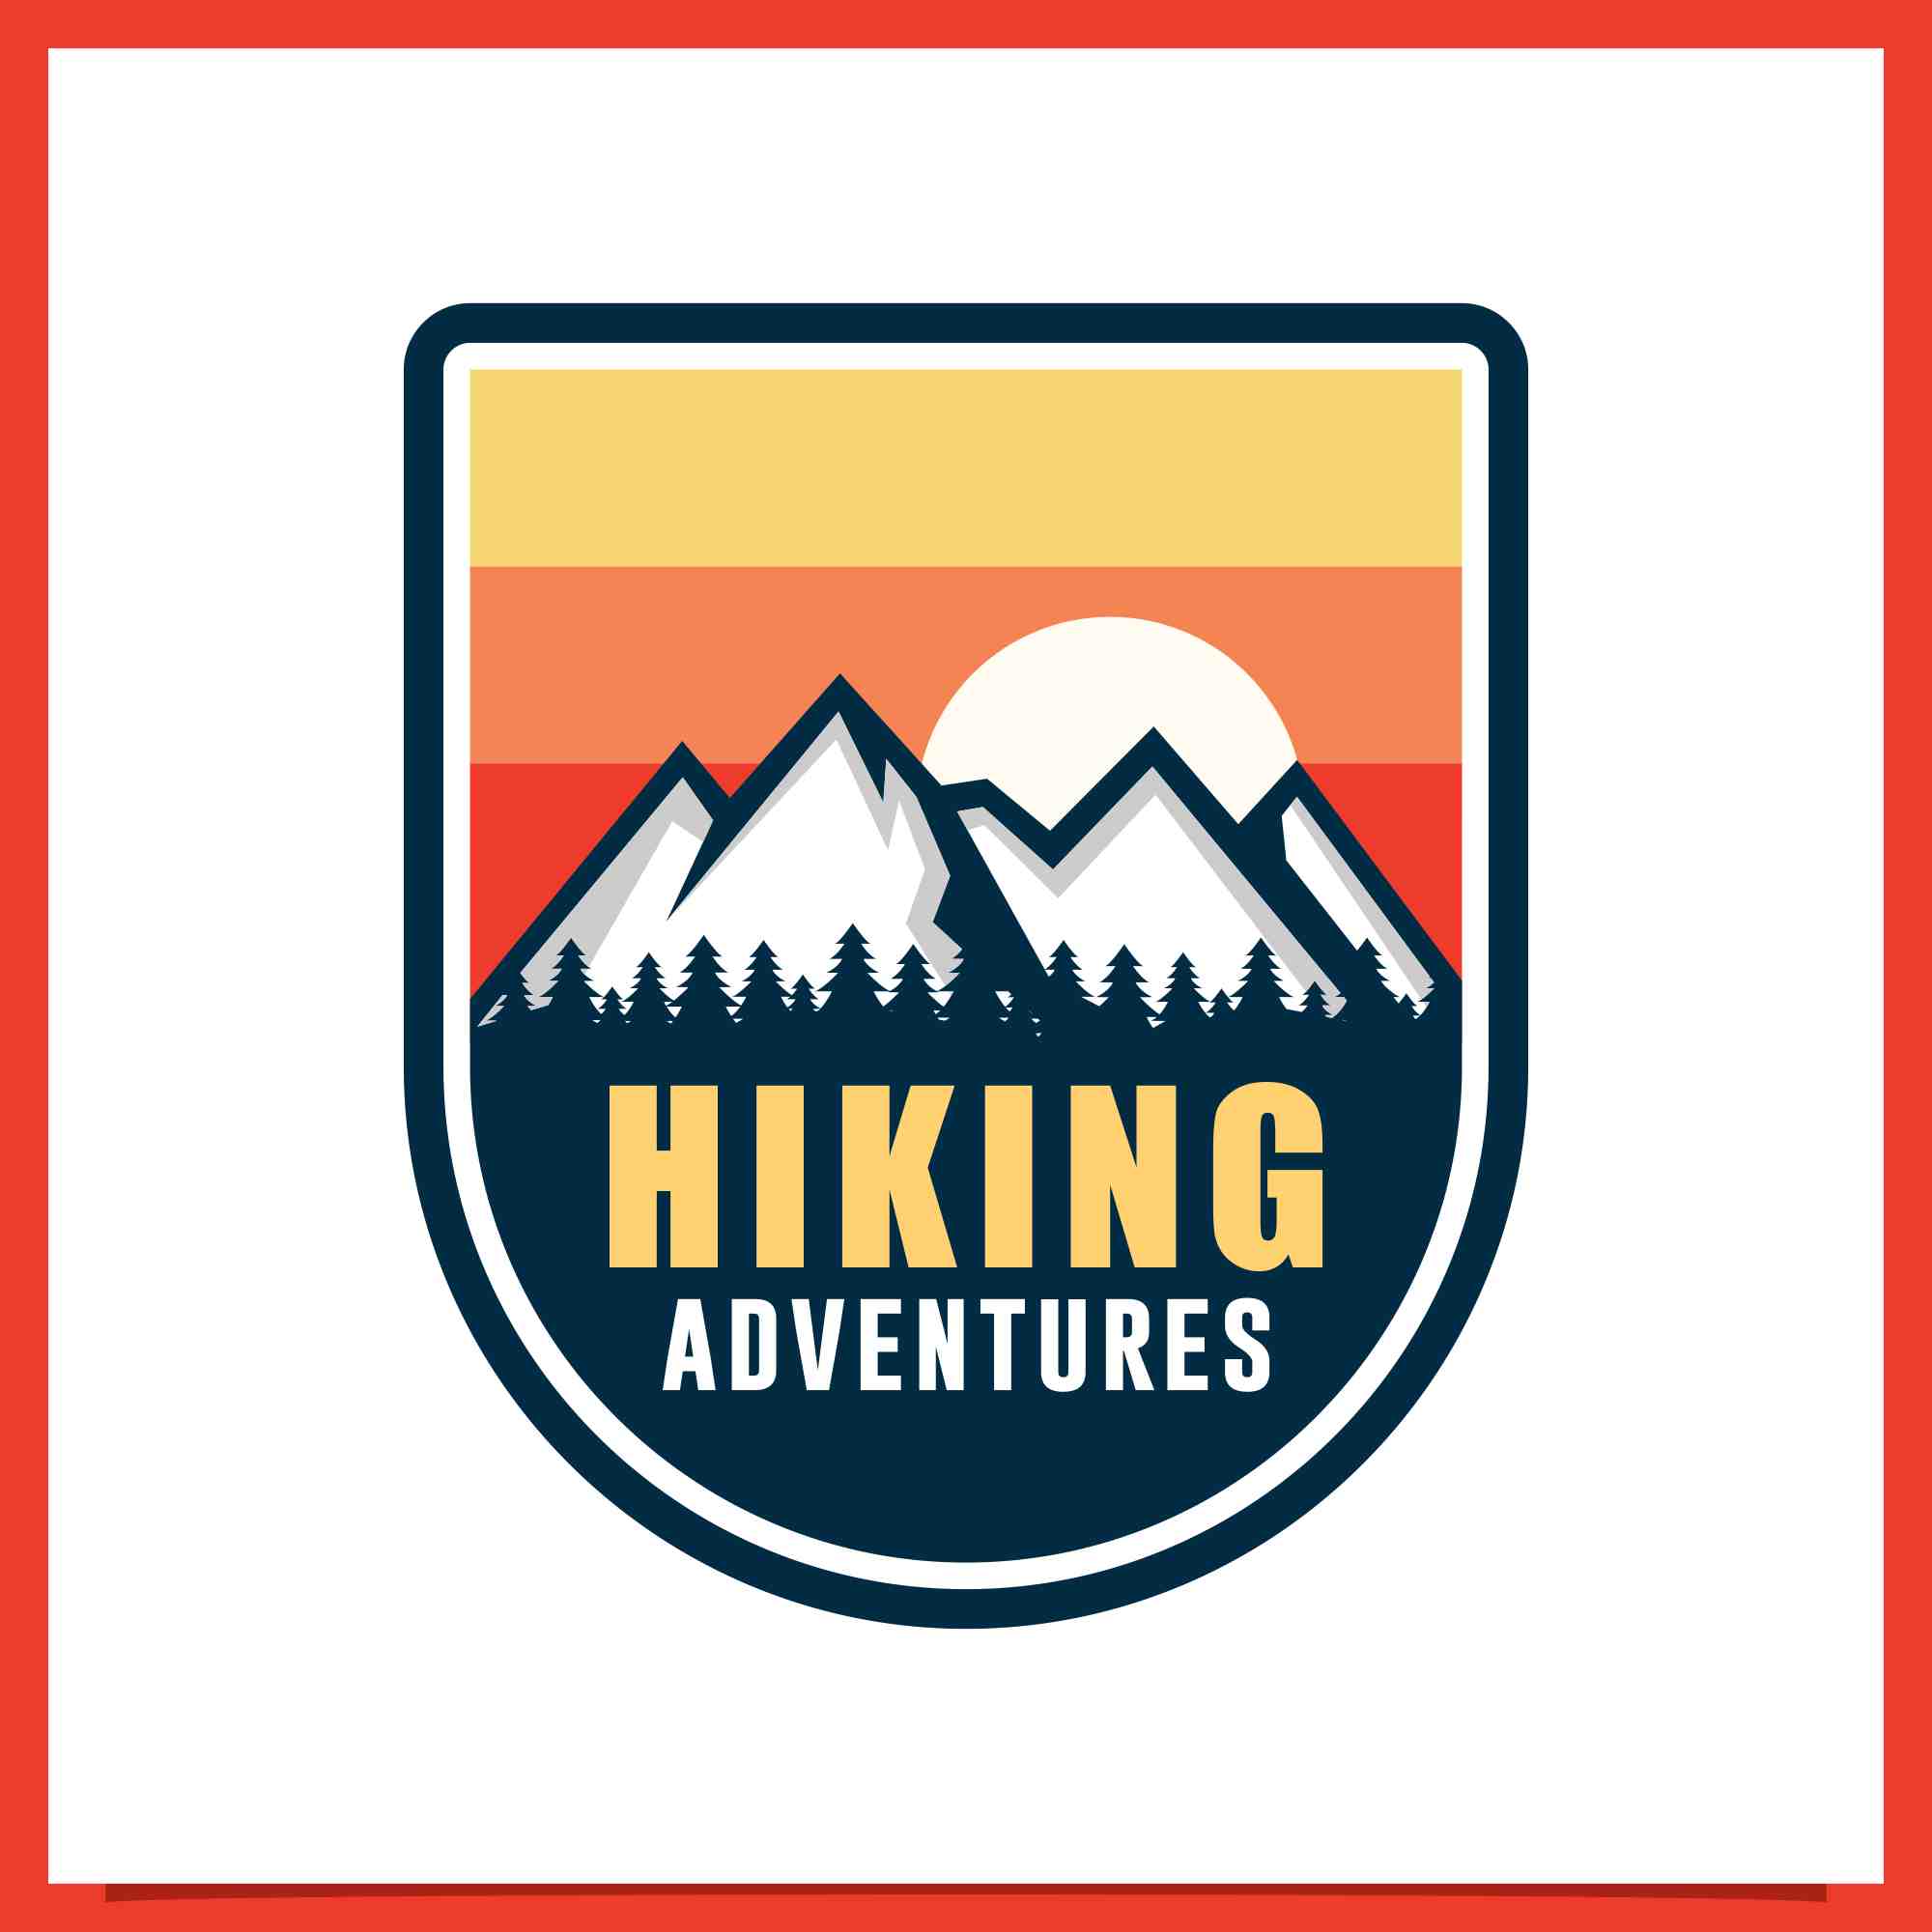 hiking adventure wild life logo 3 89